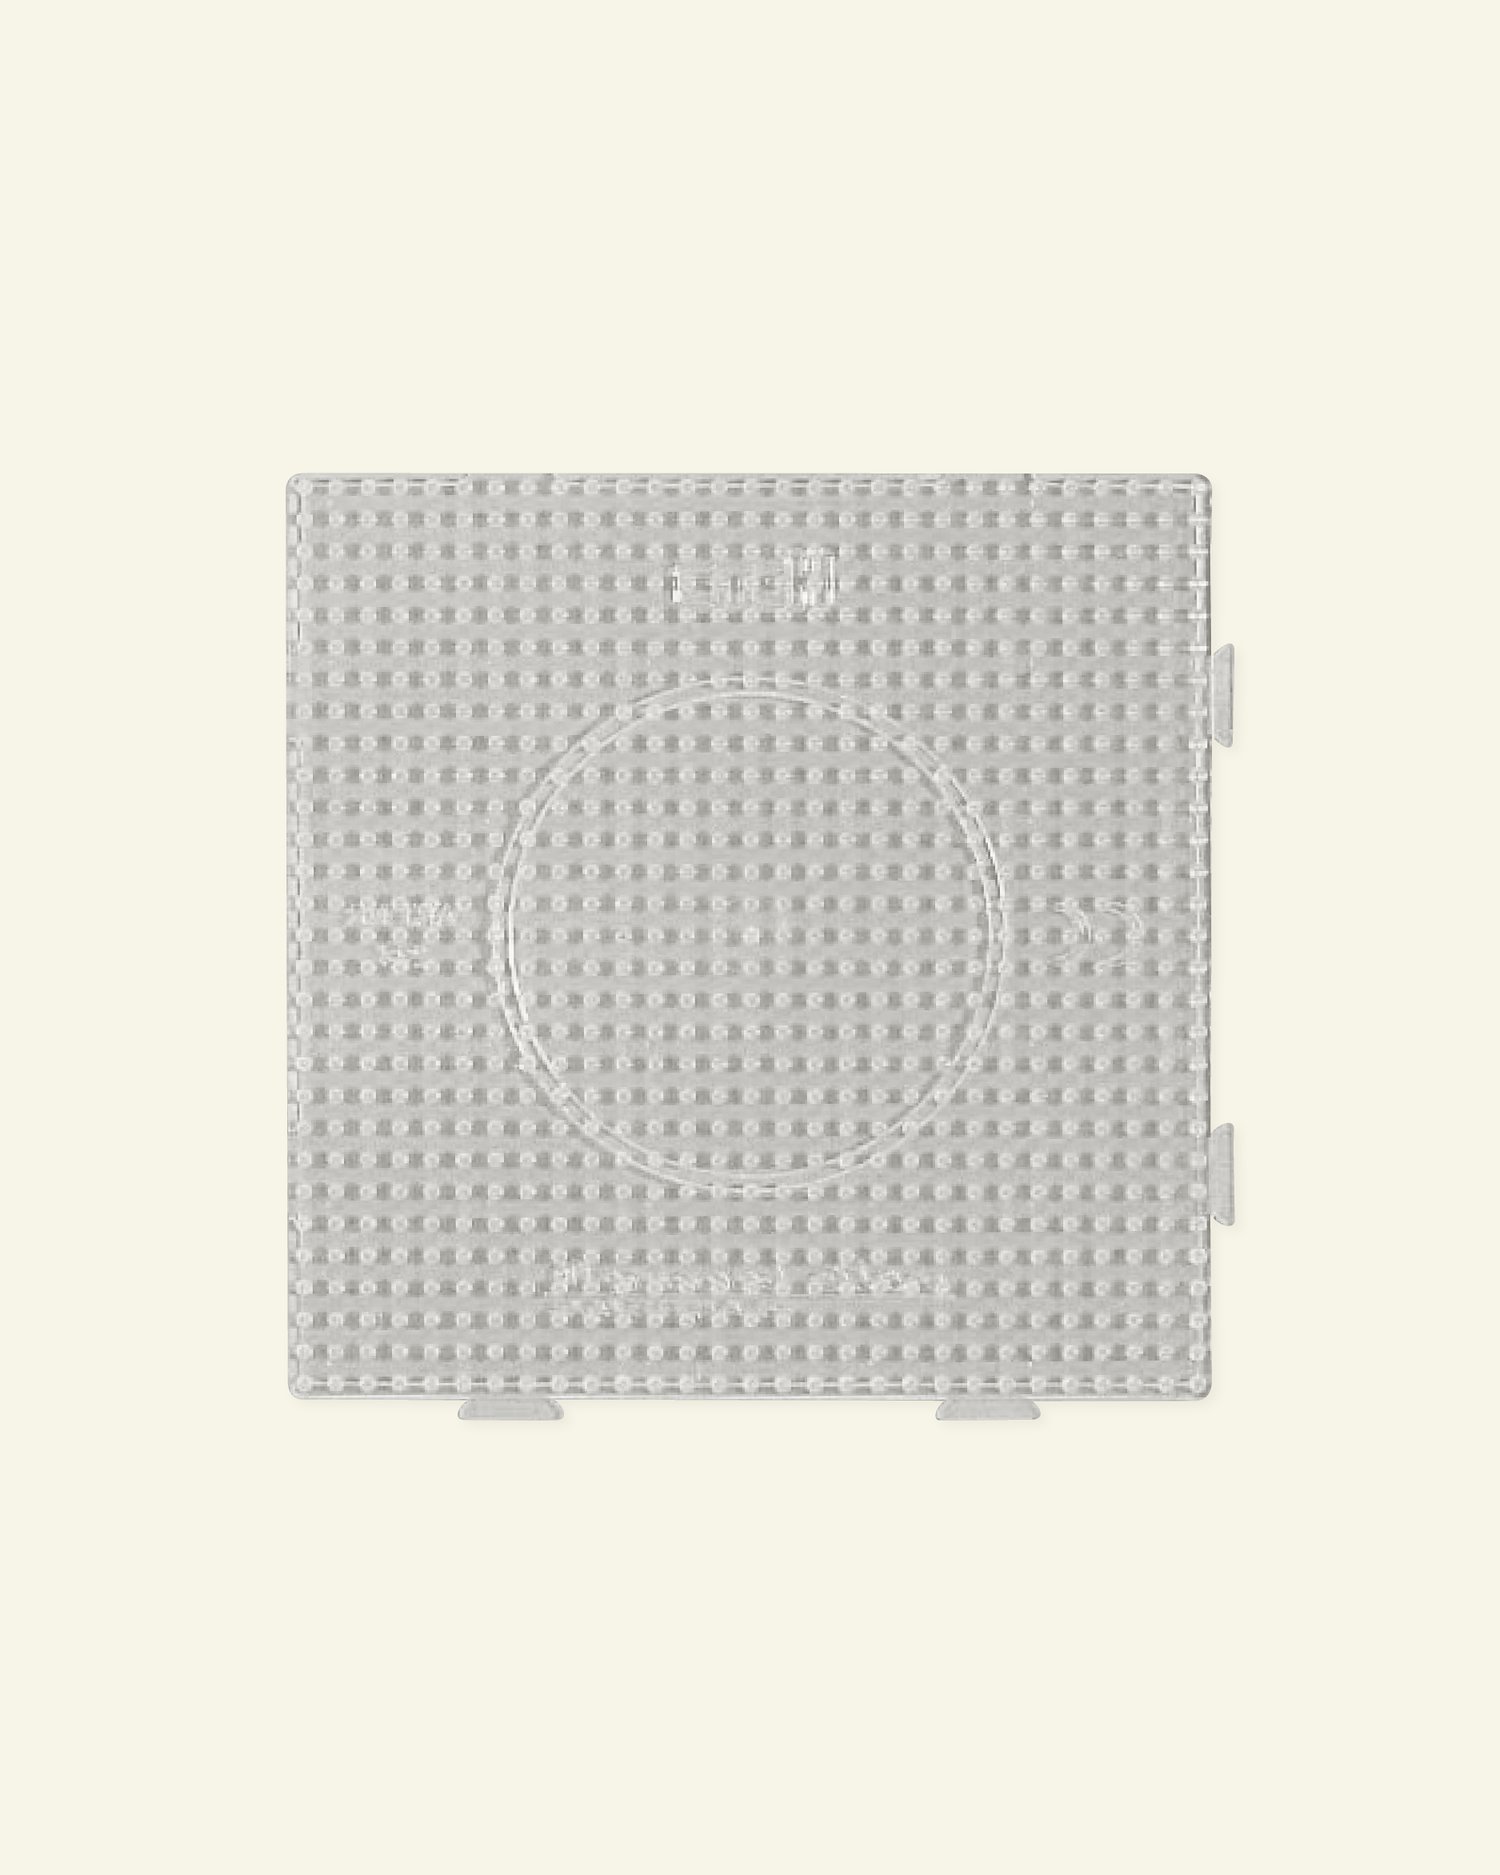 HAMA Steckplatte Quadrat transp. 15x15cm 28387_pack